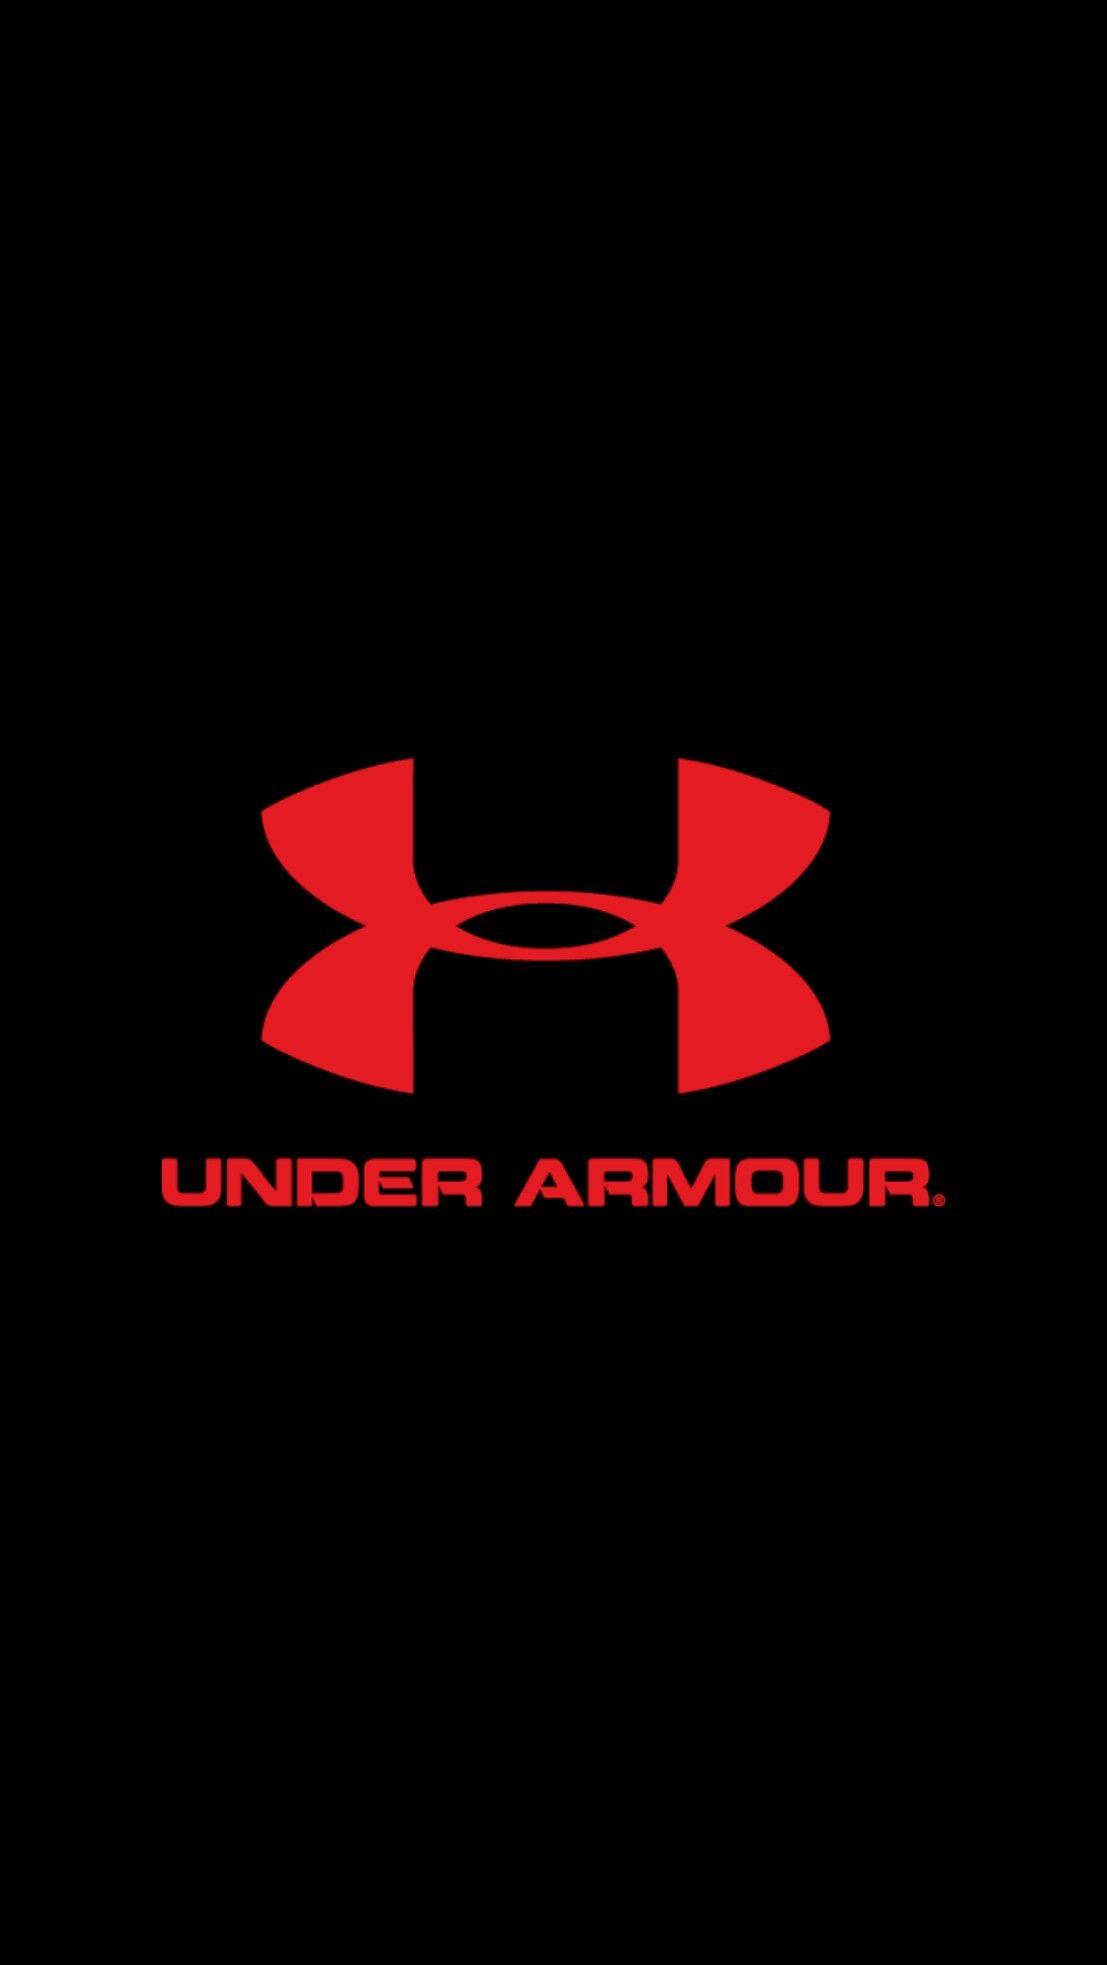 Armour Logo - underarmour #dbz #naruto #university #iphone wallpaper #android ...